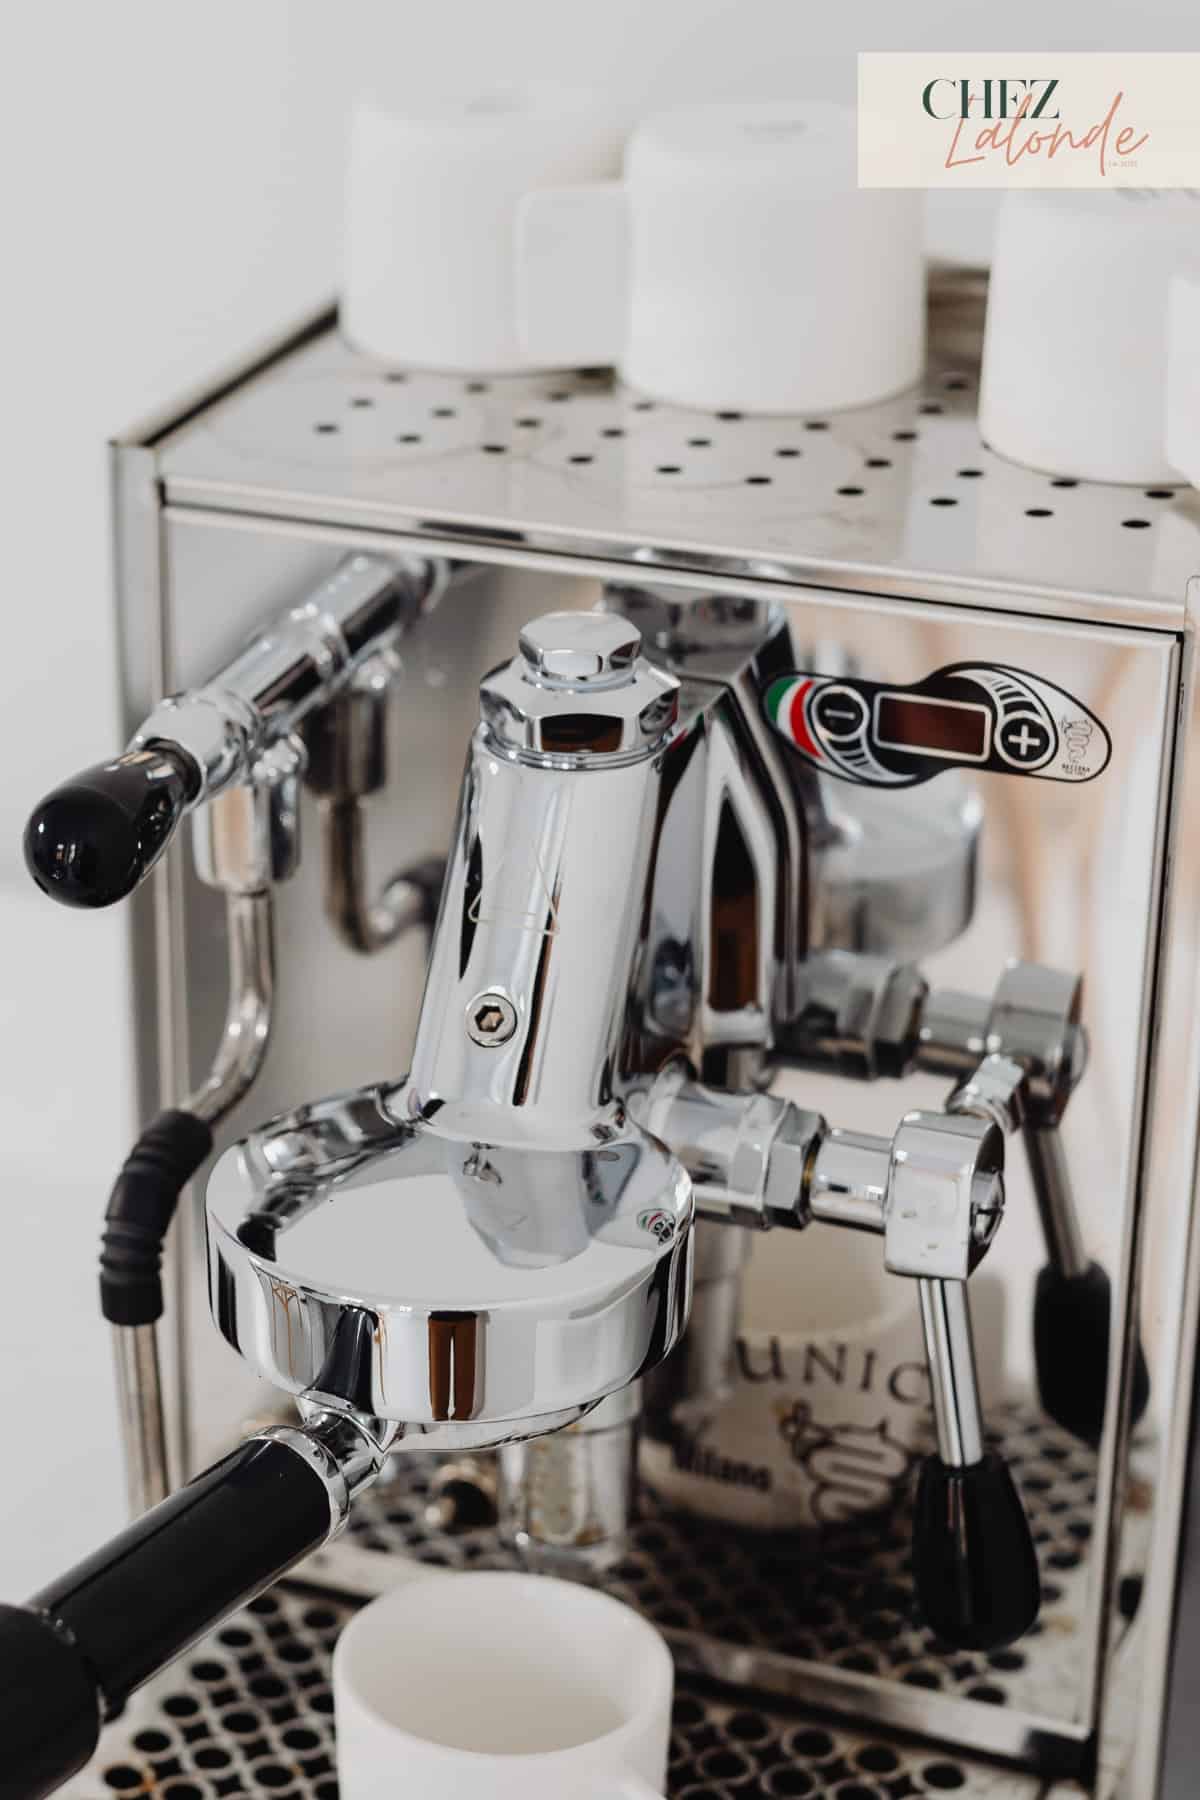 An Italian espresso machine.